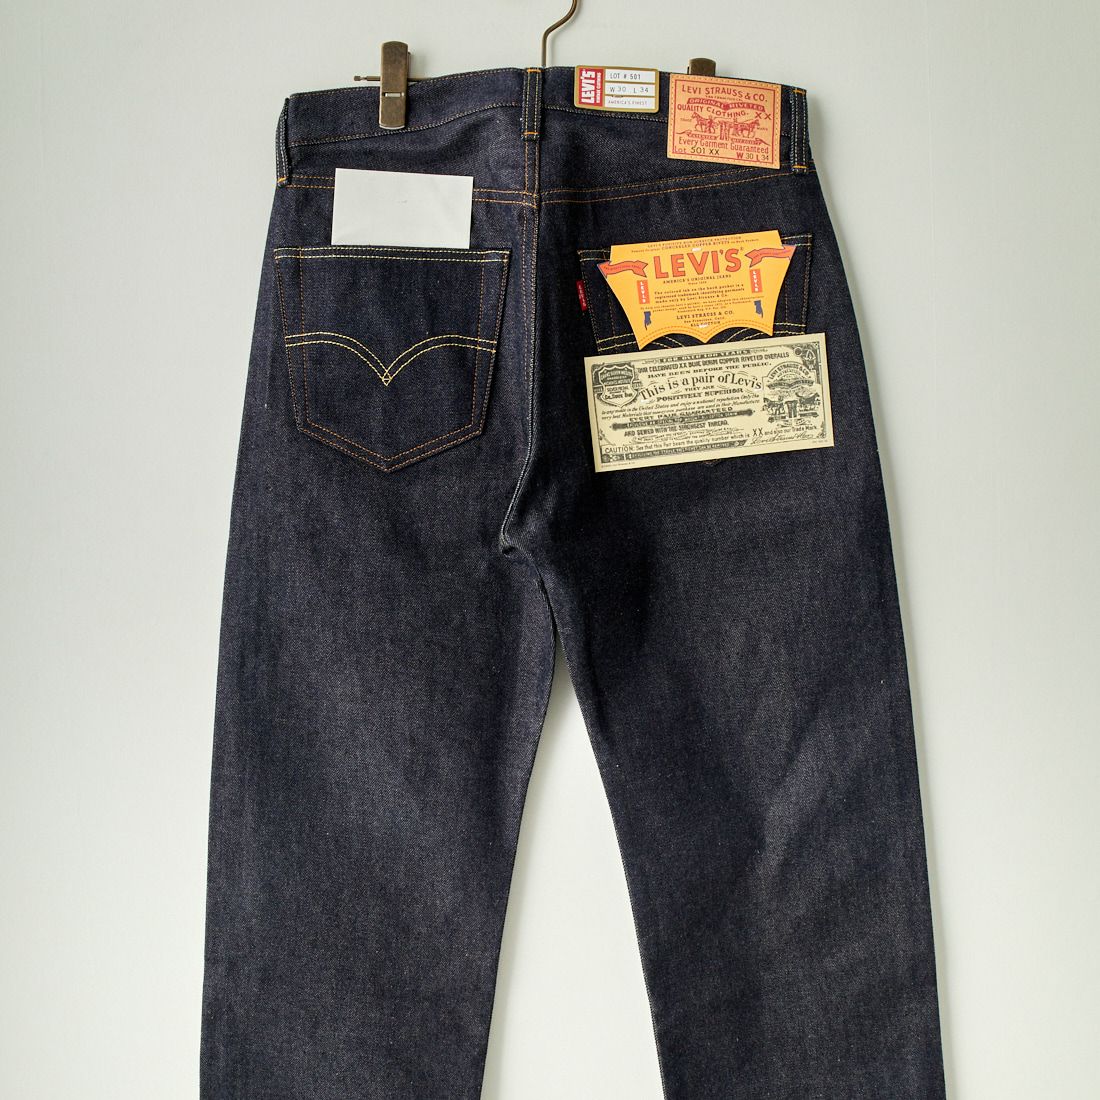 LEVIS Vintage Clothing [リーバイス ヴィンテージ クロージング] 1955モデル 501 [50155-00] 79 RIGID